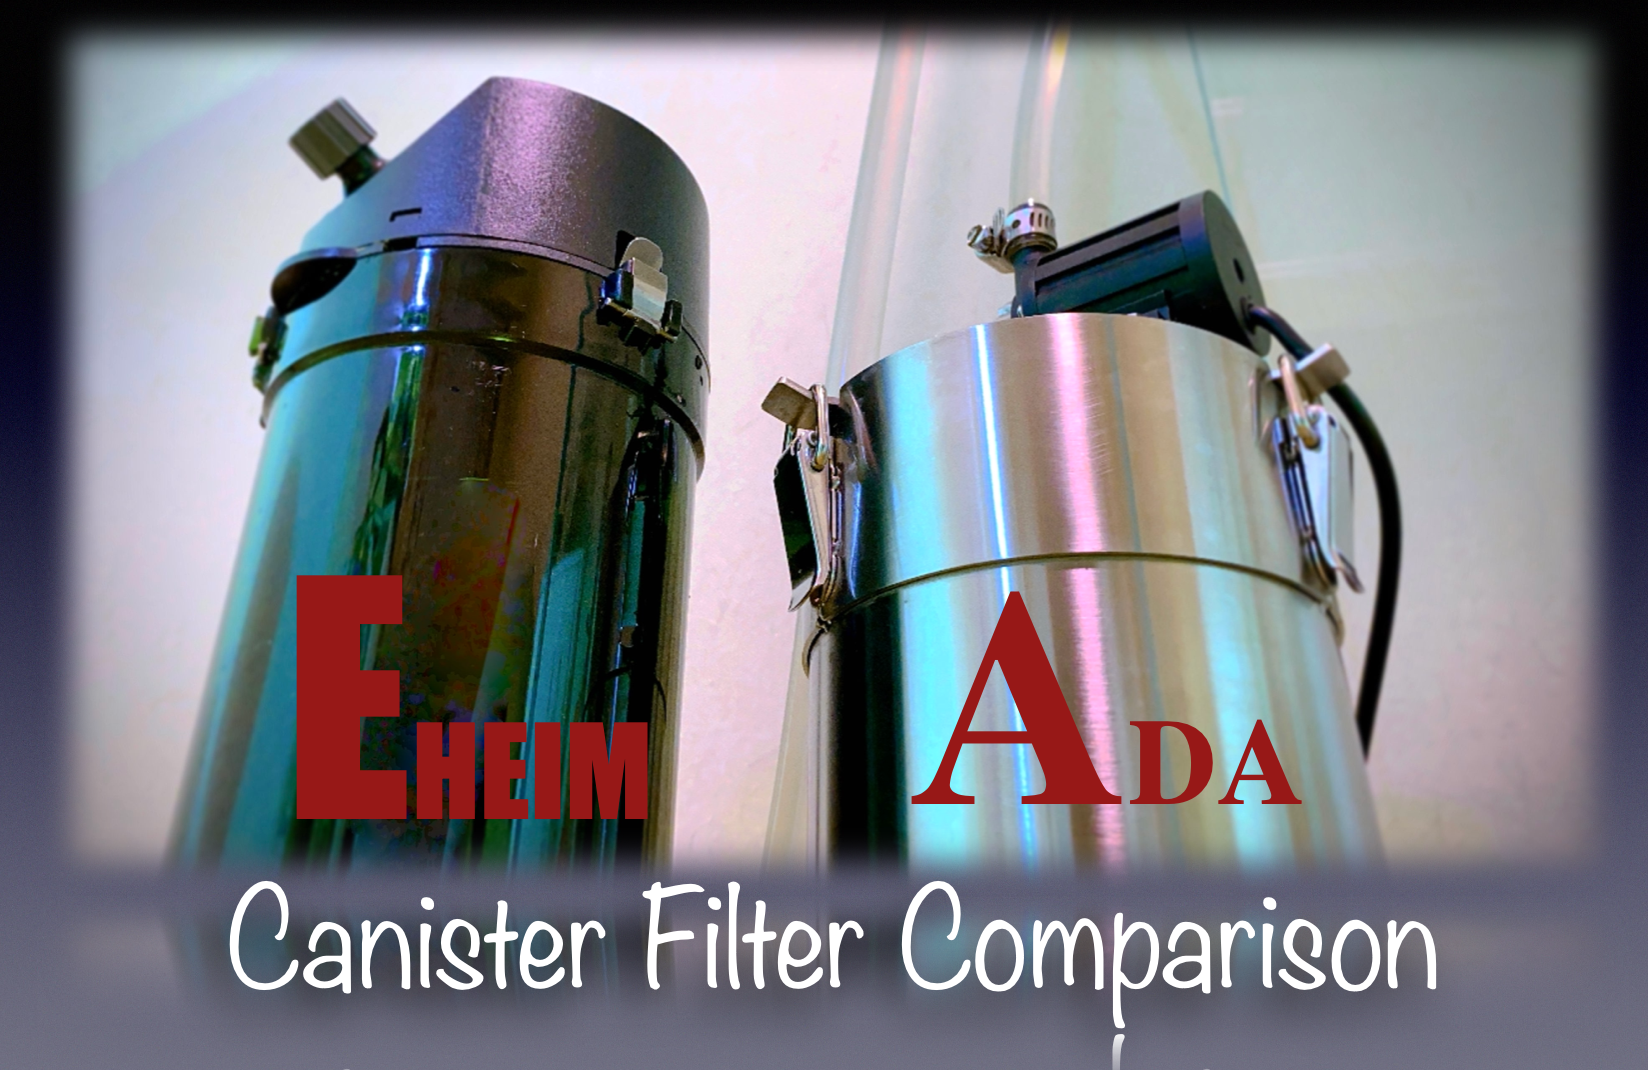 EHEIM vs ADA Canister Filter Comparison